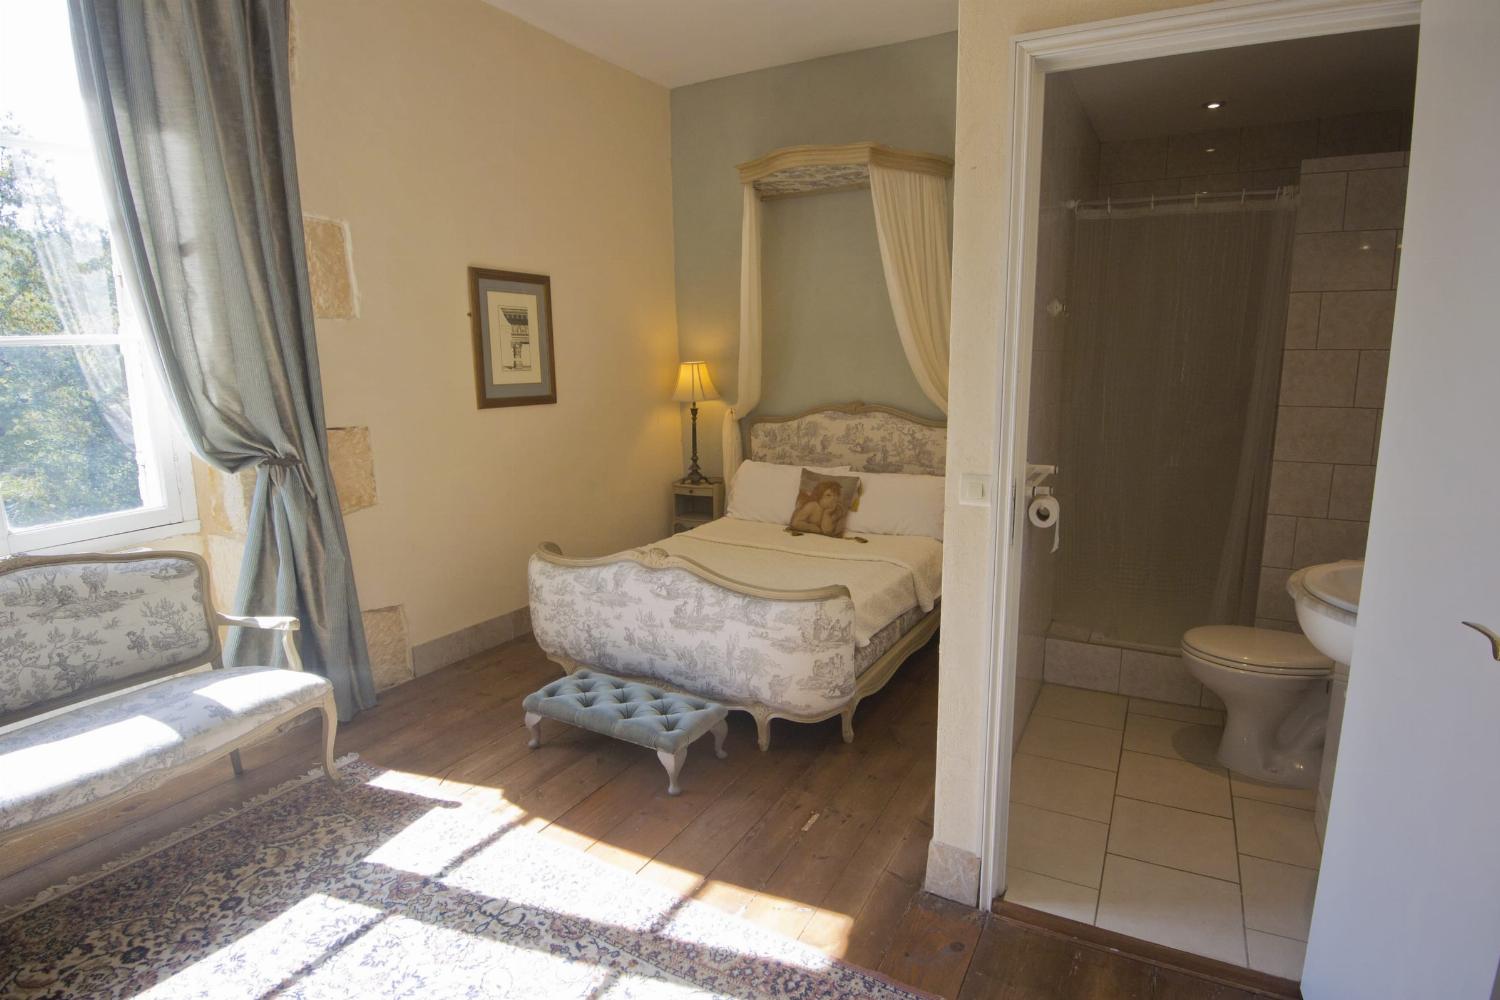 Bedroom | Rental home in Nouvelle-Aquitaine